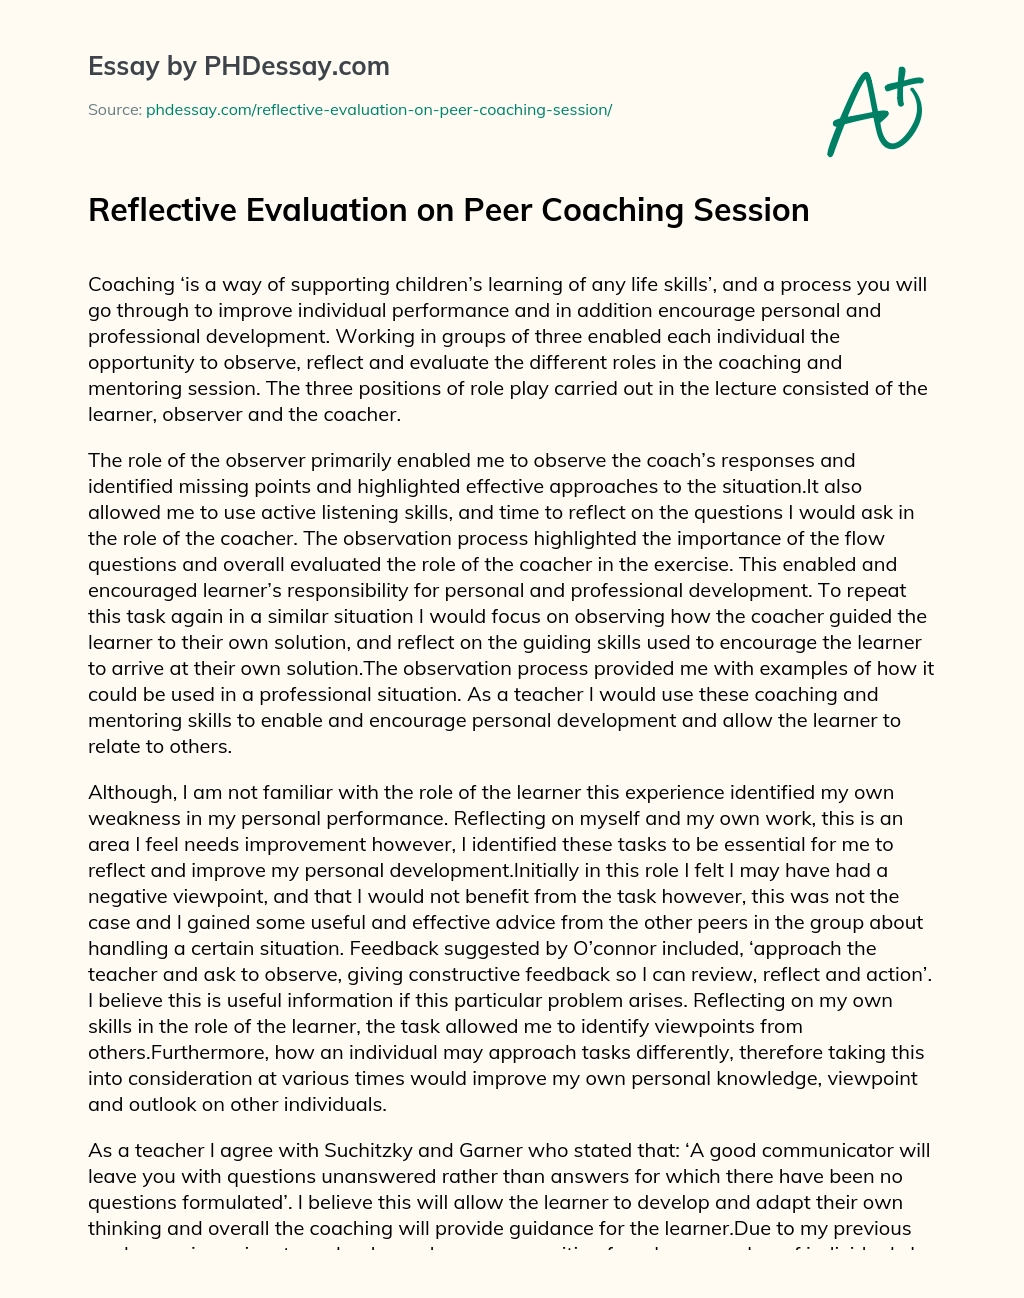 Reflective Evaluation on Peer Coaching Session essay